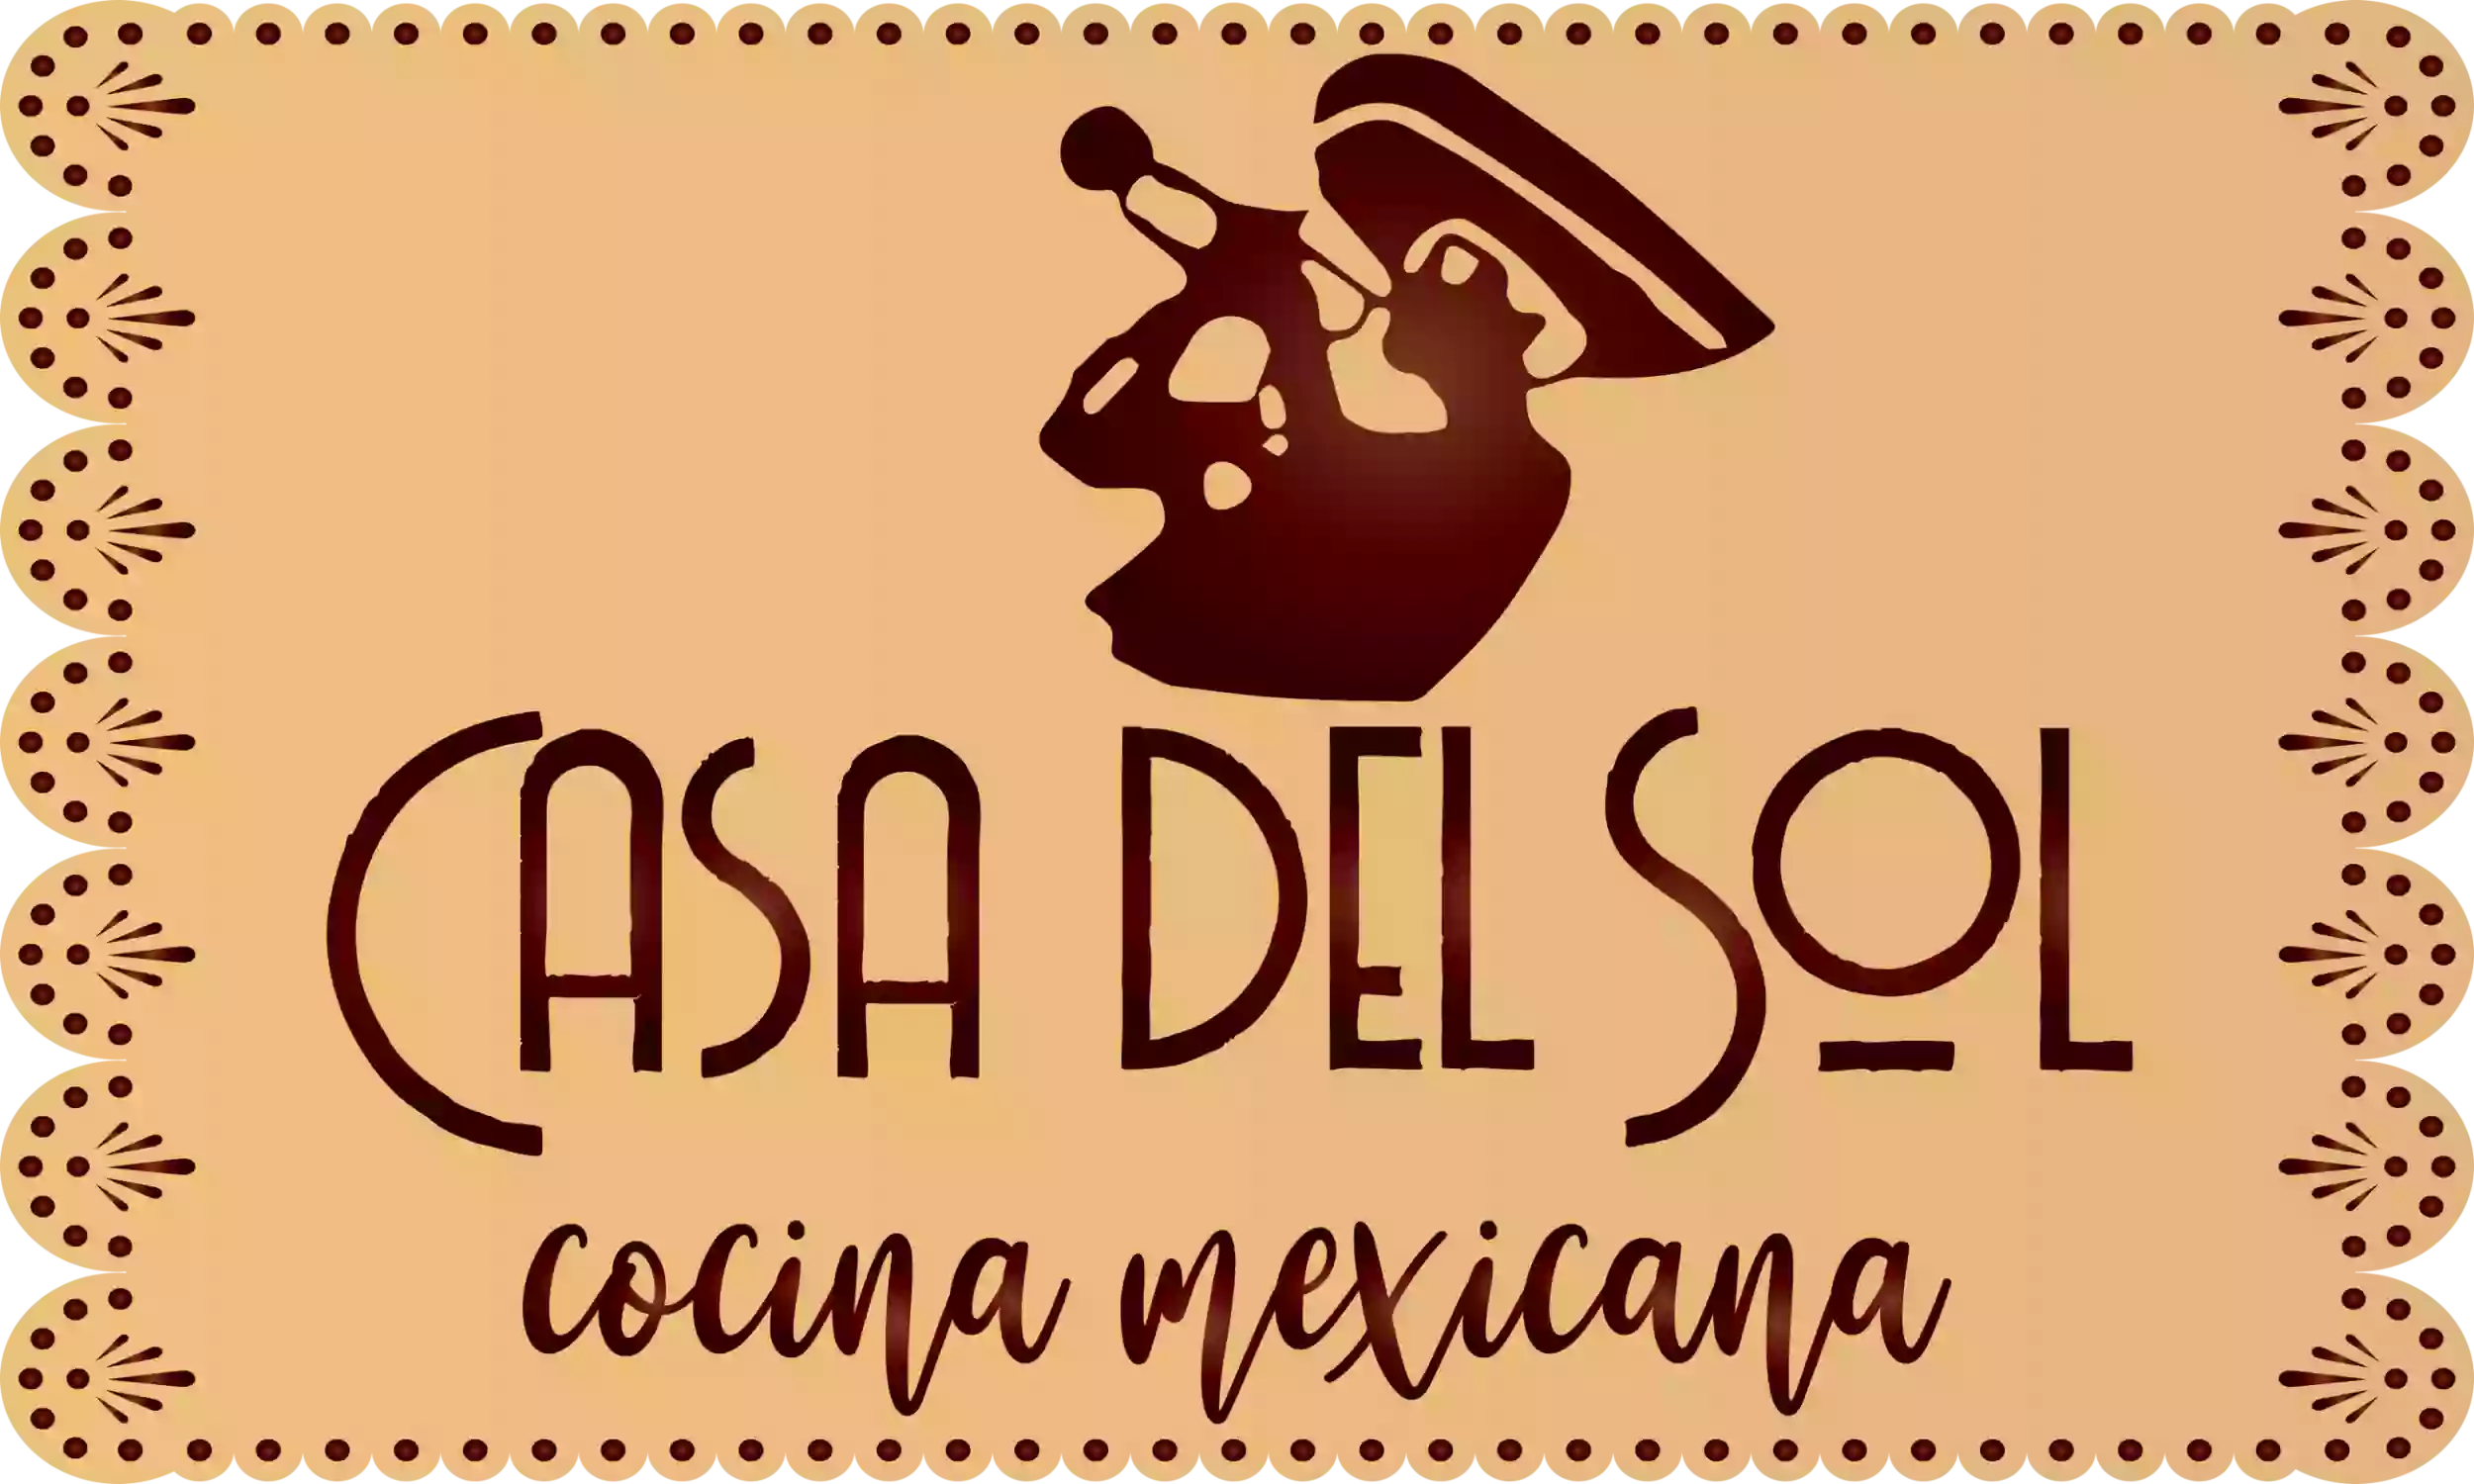 Casa del Sol Cocina Mexicana